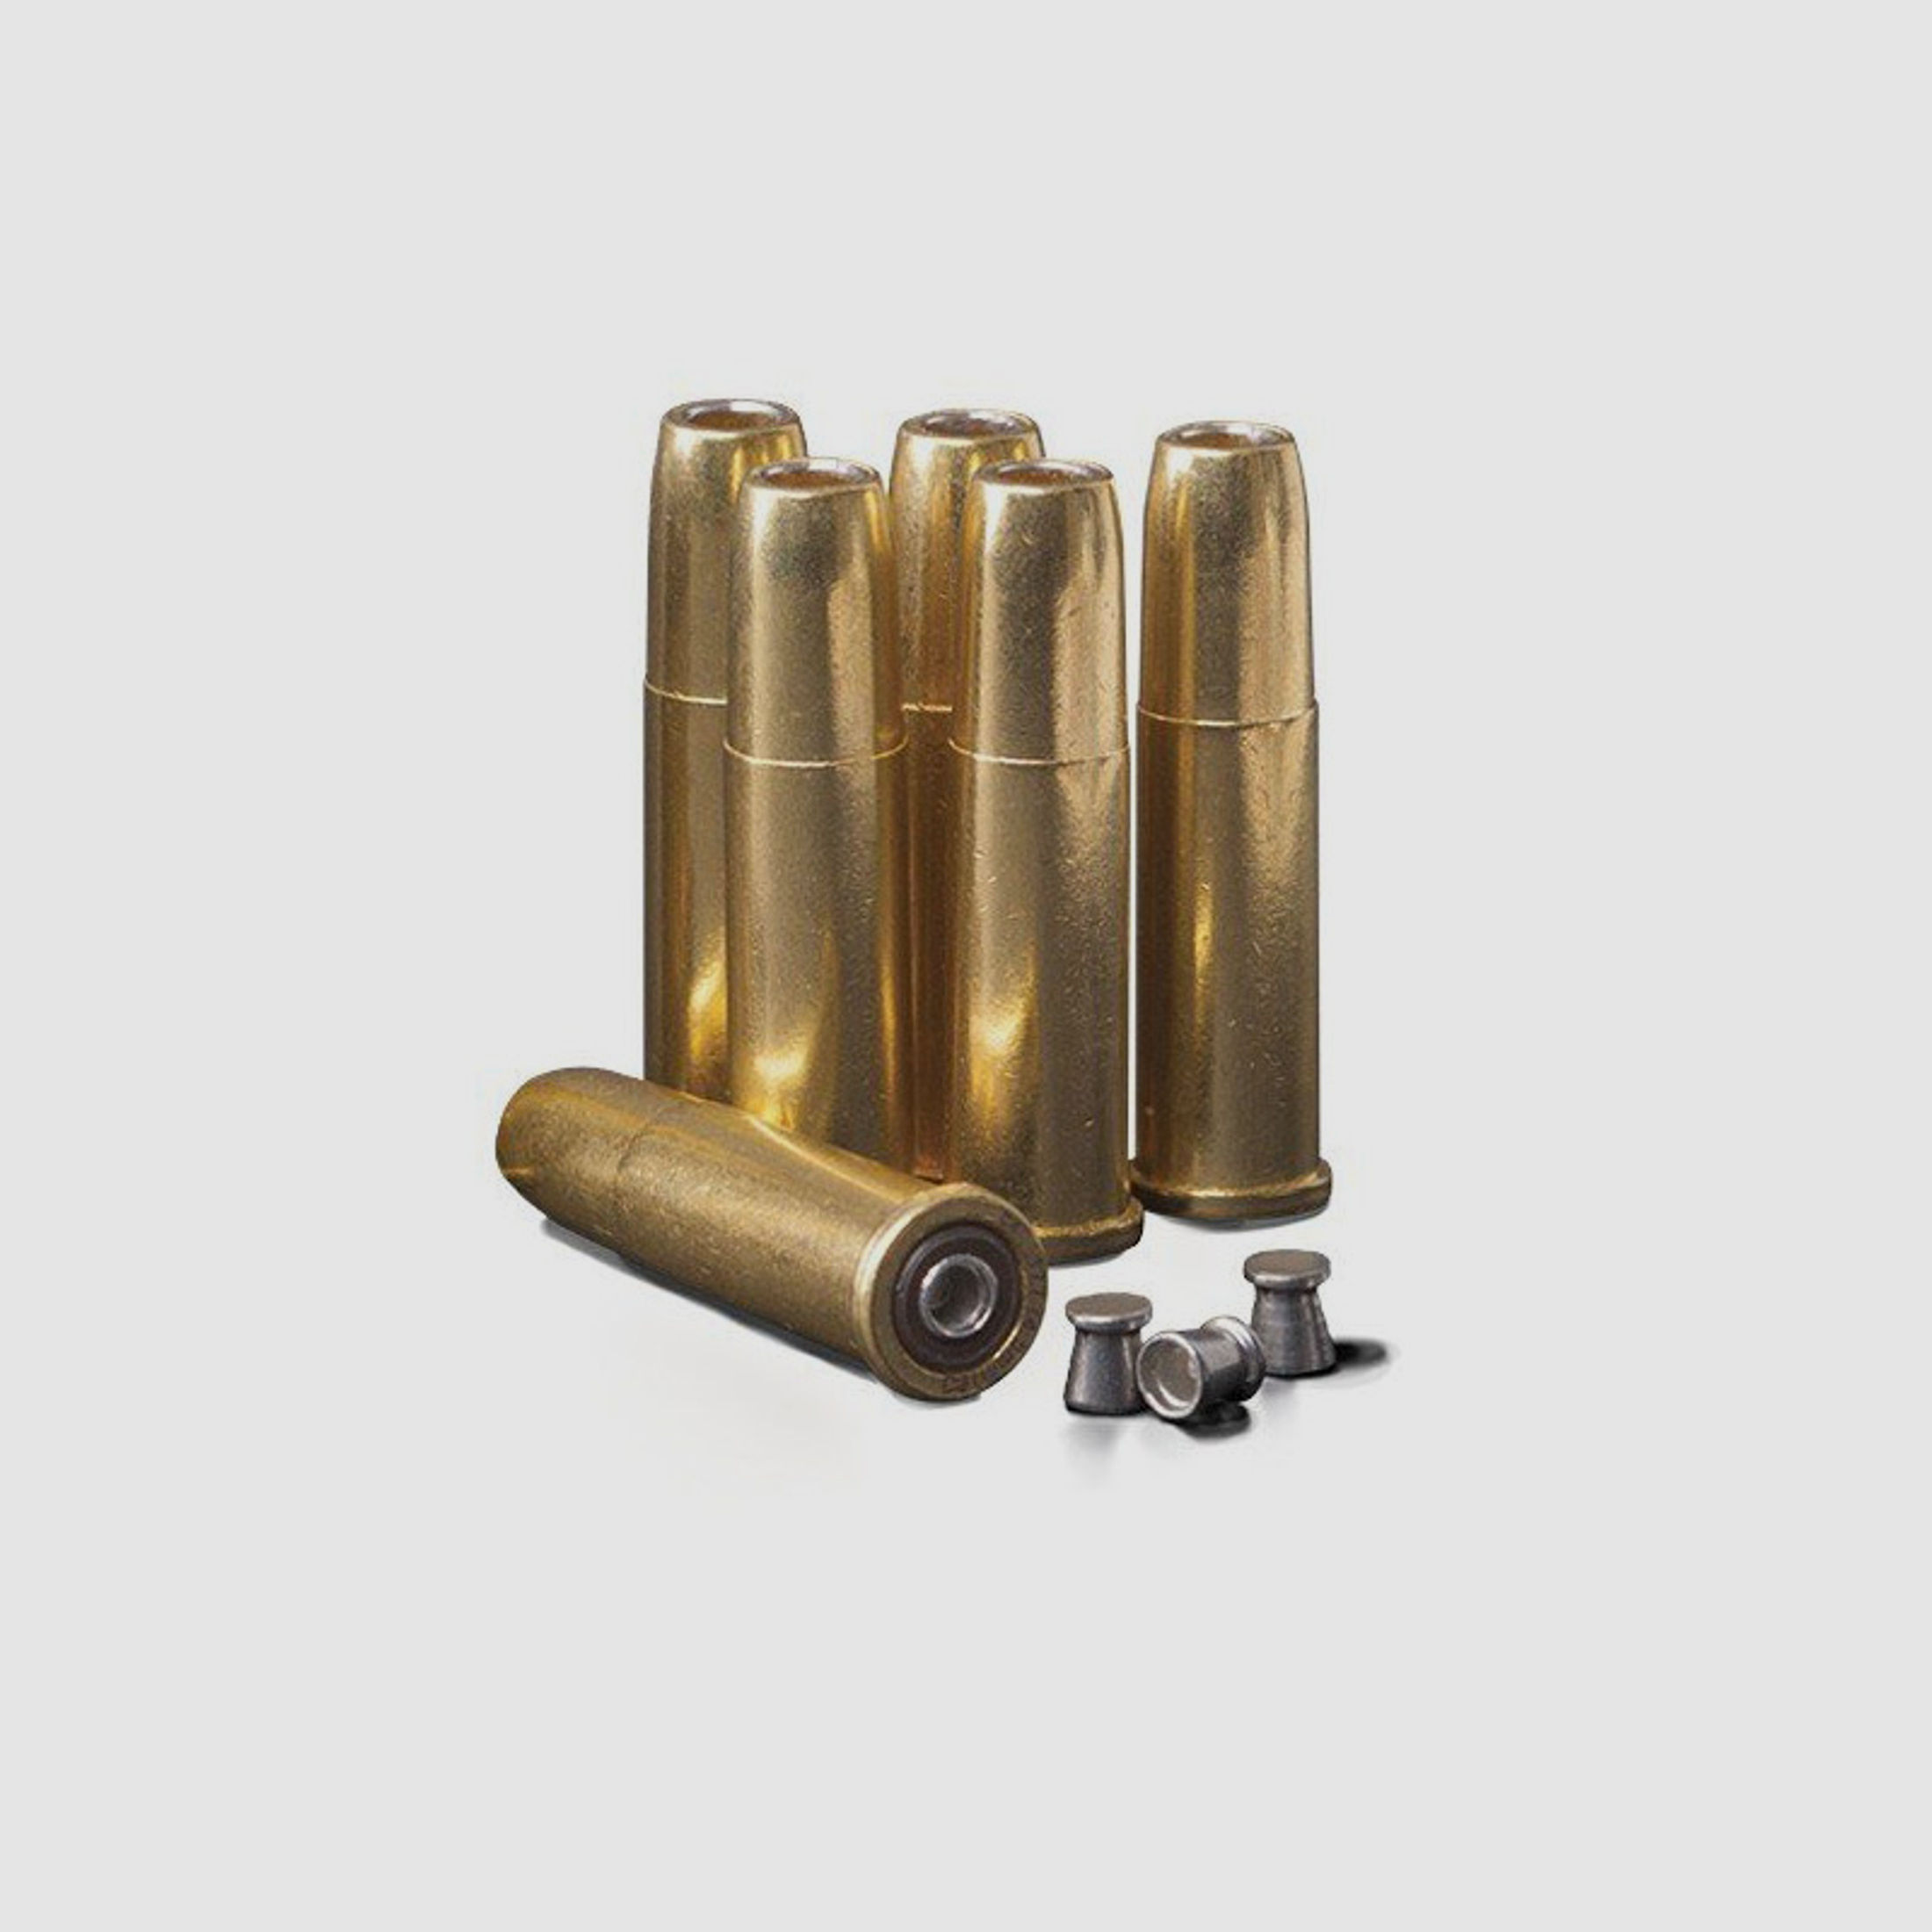 LadehĂĽlsen fĂĽr CO2 Revolver ASG Dan Wesson Crosman Remington 1875 und SNR357 Snub Nose, 6 StĂĽck Kaliber 4,5 mm Diabolo